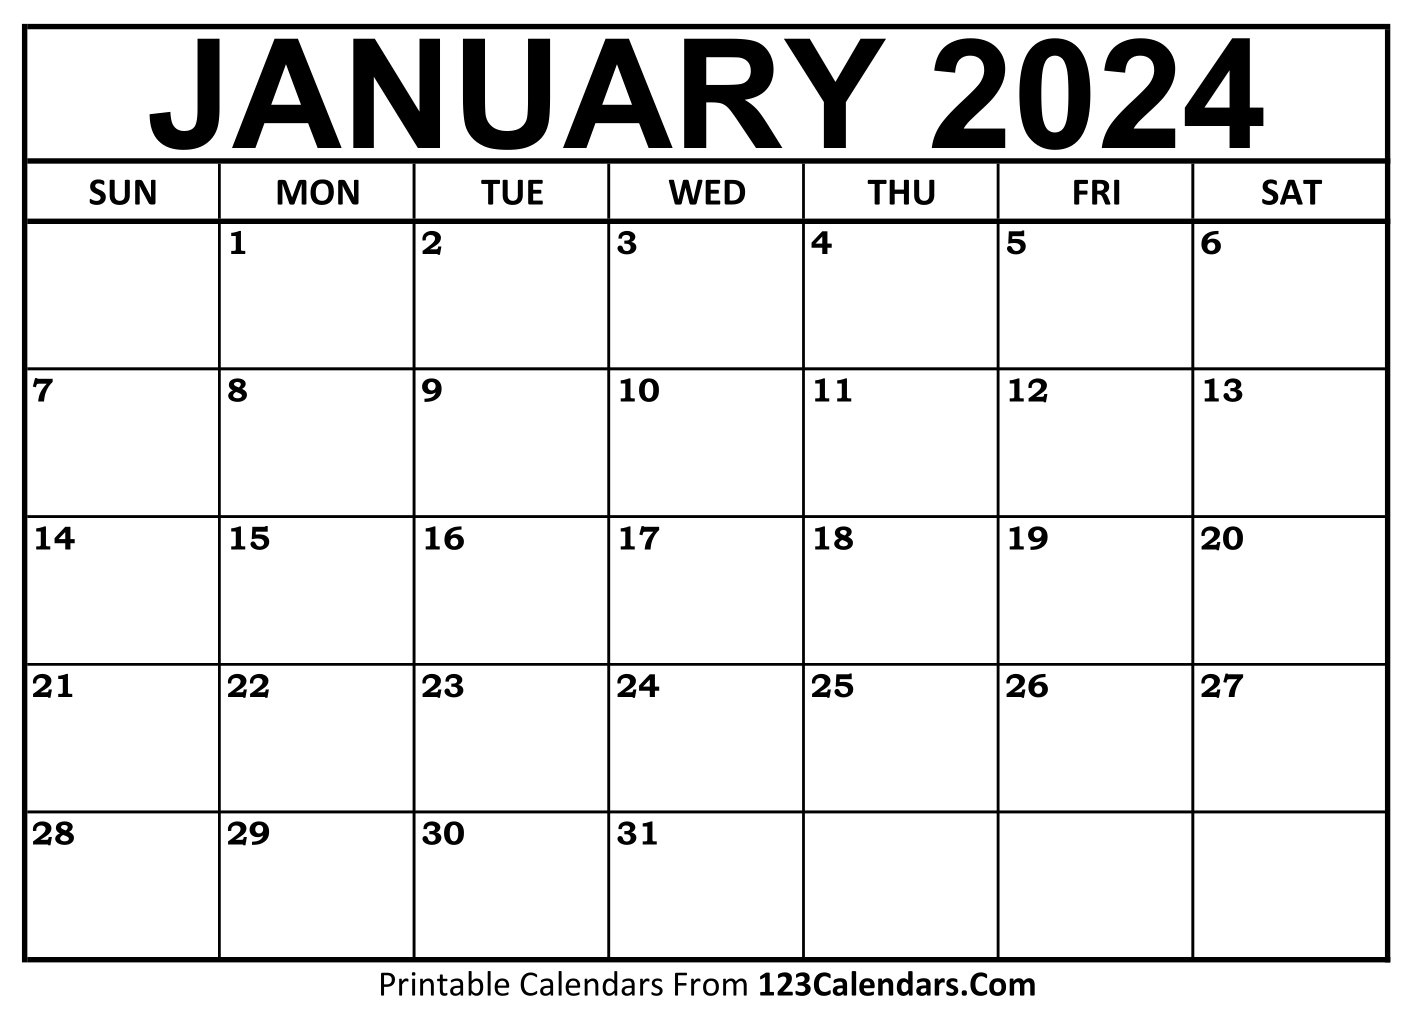 Printable January 2024 Calendar Templates - 123Calendars | Monthly Calendar 2024 Printable Free